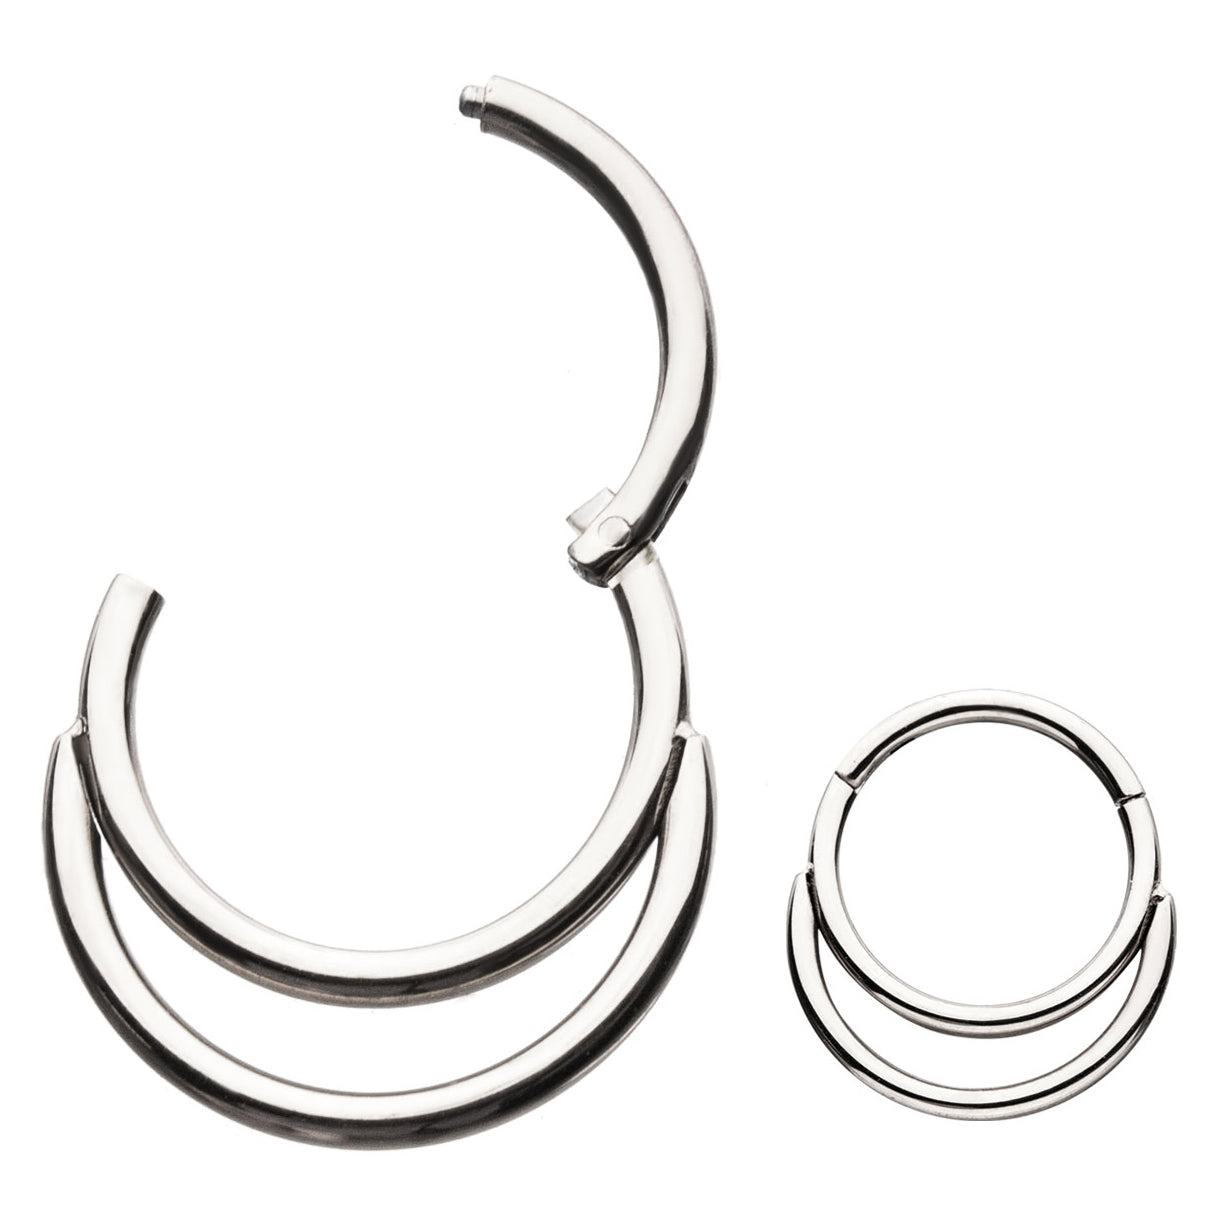 18g Double Stainless Hinged Segment Ring Hinged Rings 18g - 5/16" diameter (8mm) Stainless Steel